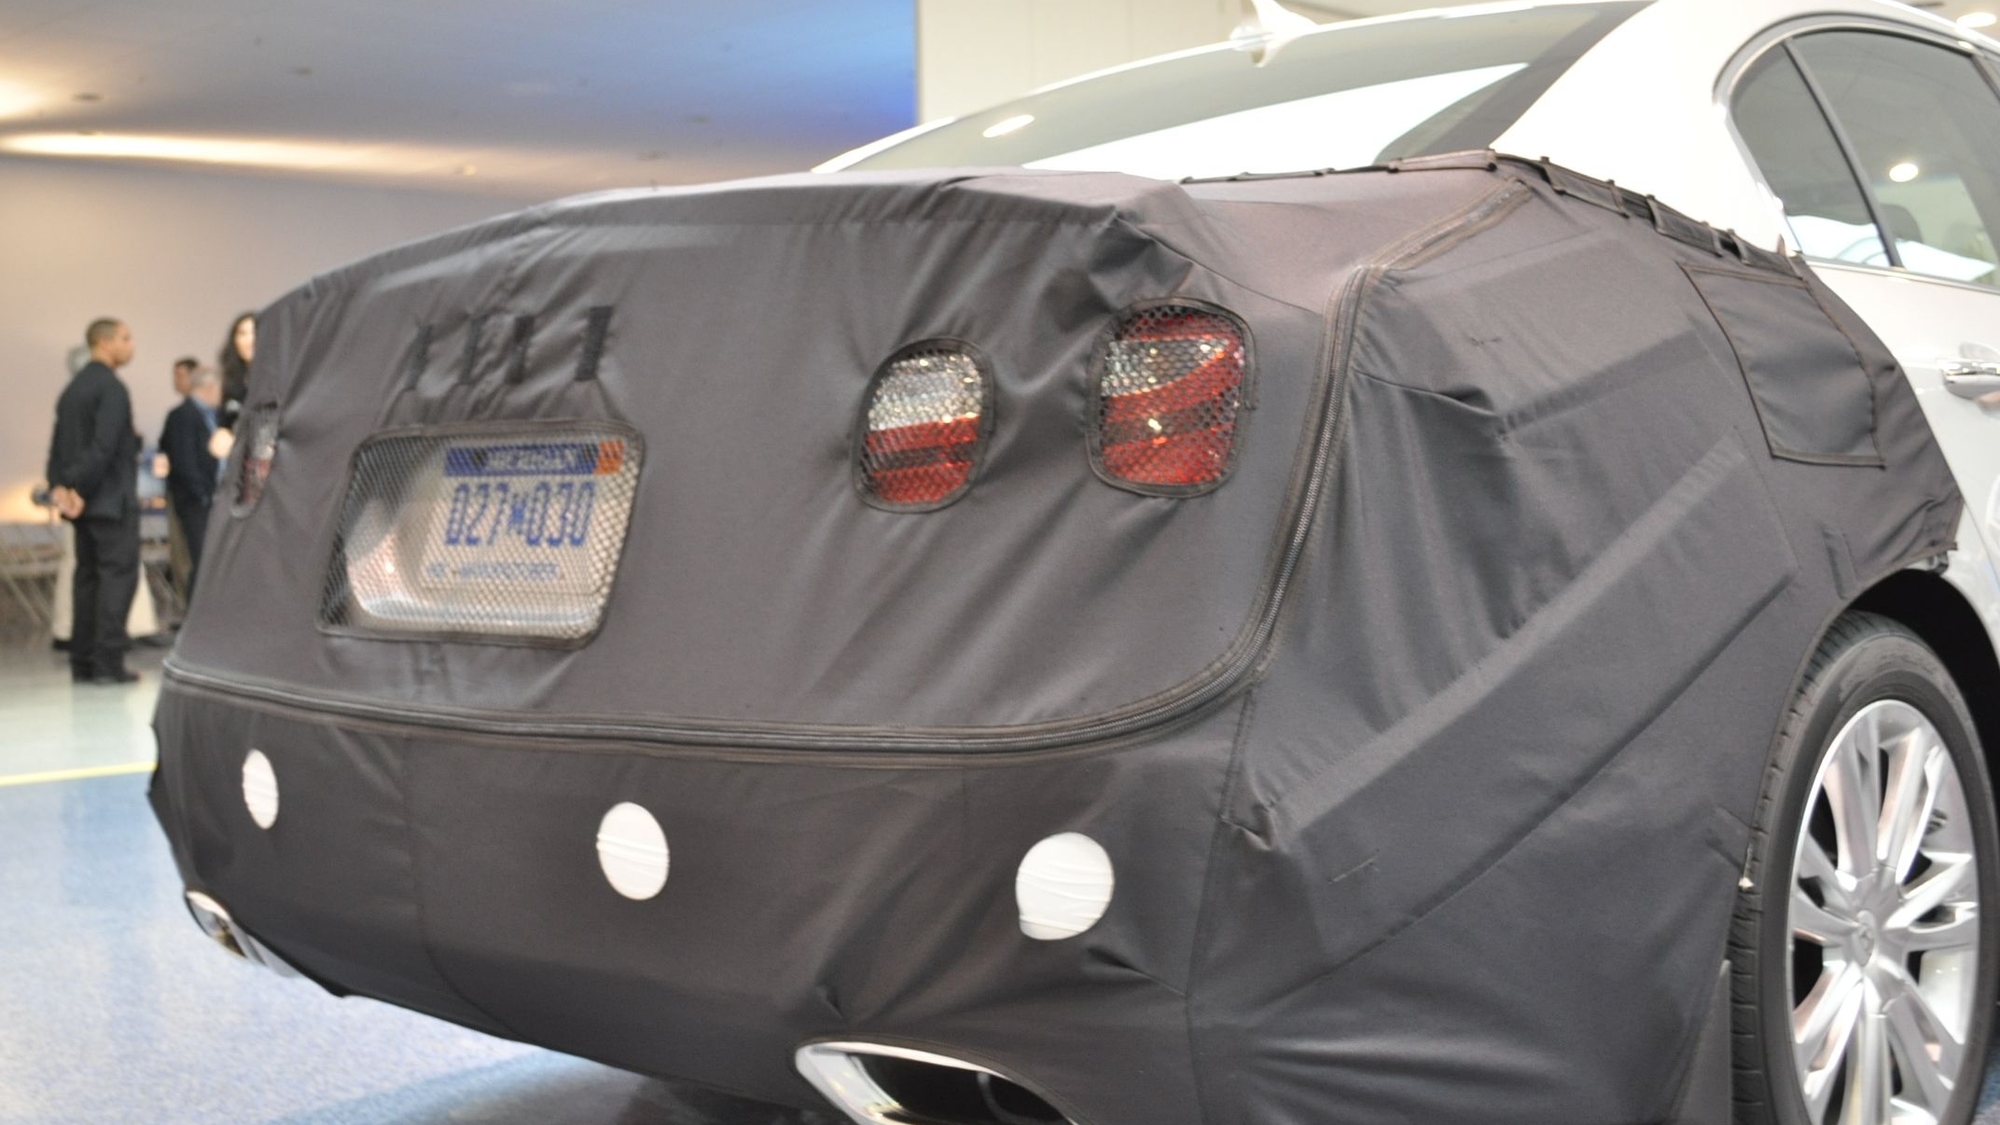 2012 Hyundai Genesis Sedan spy shots from inside Hyundai's Technical Center